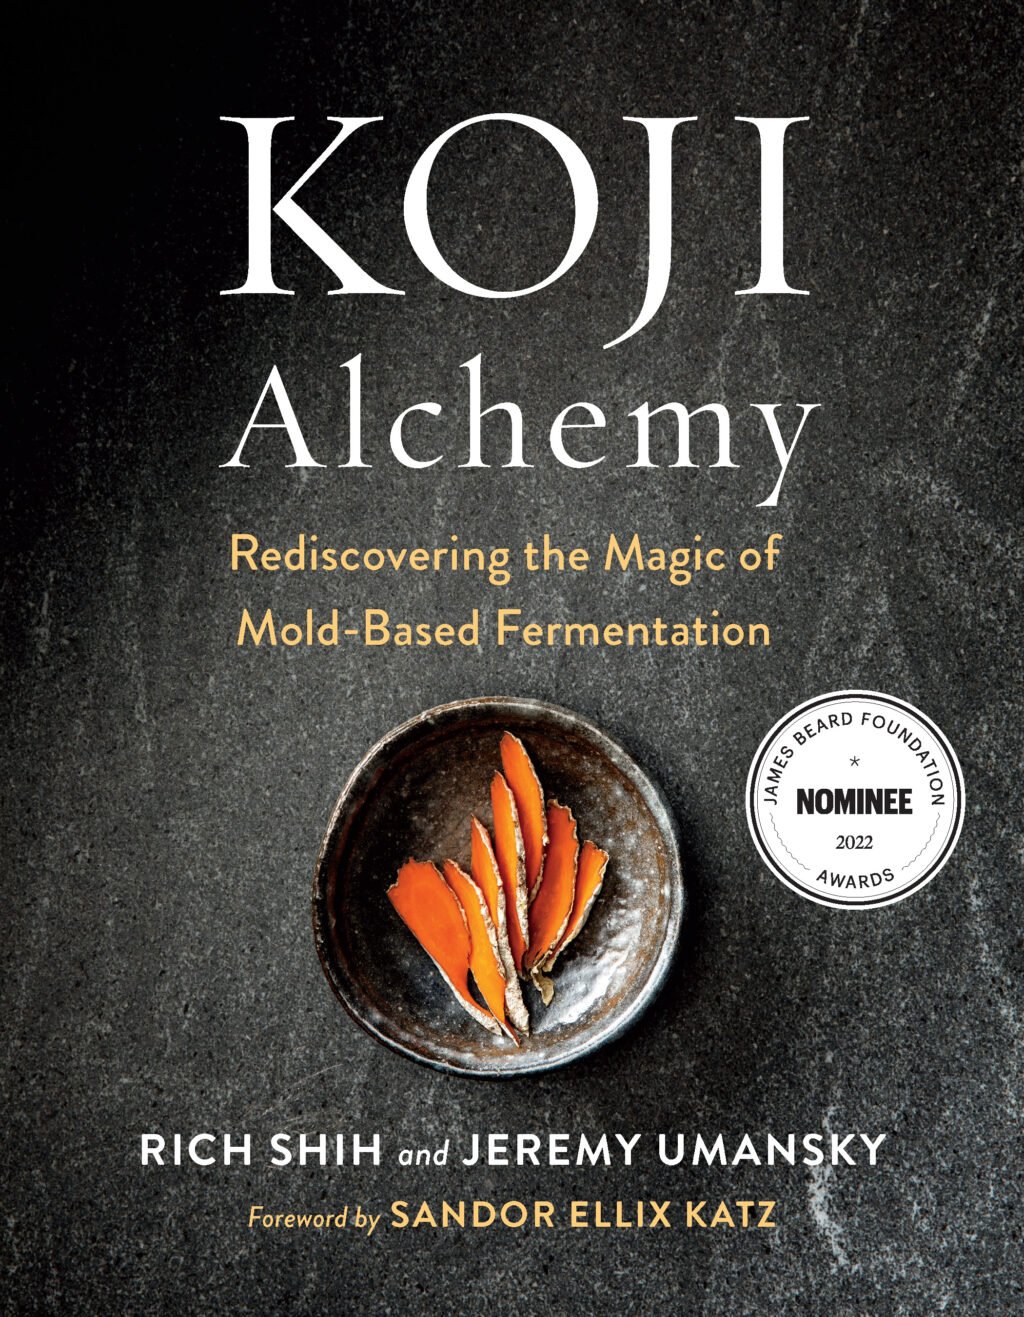 The Koji Alchemy cover